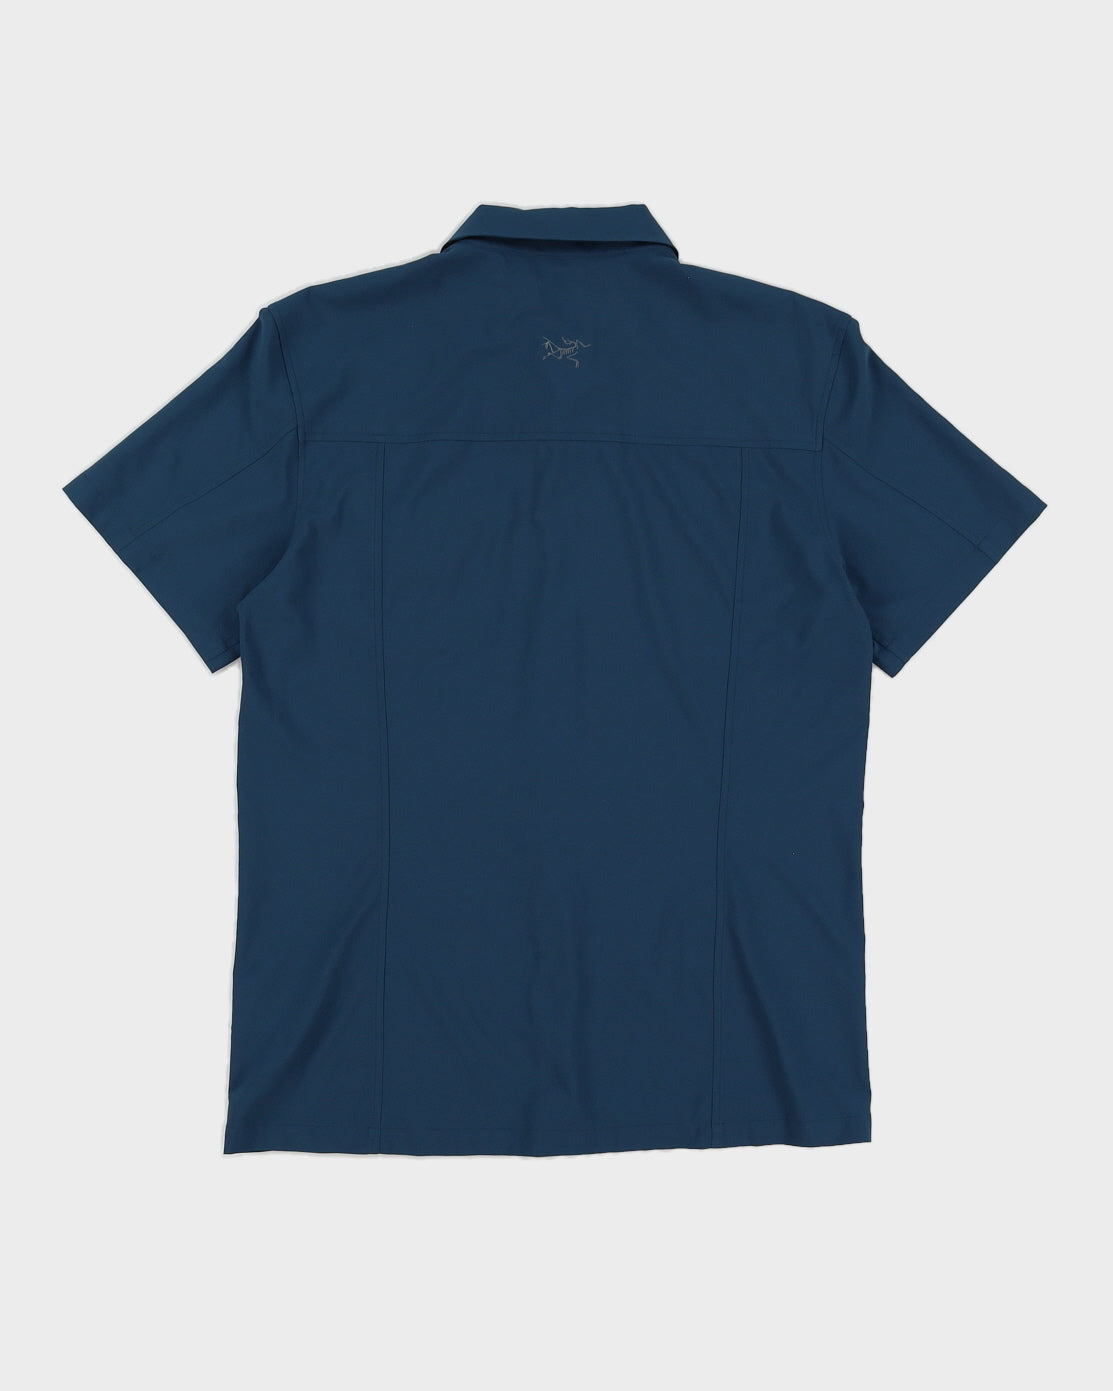 Blue Arc'teryx Shirt - M